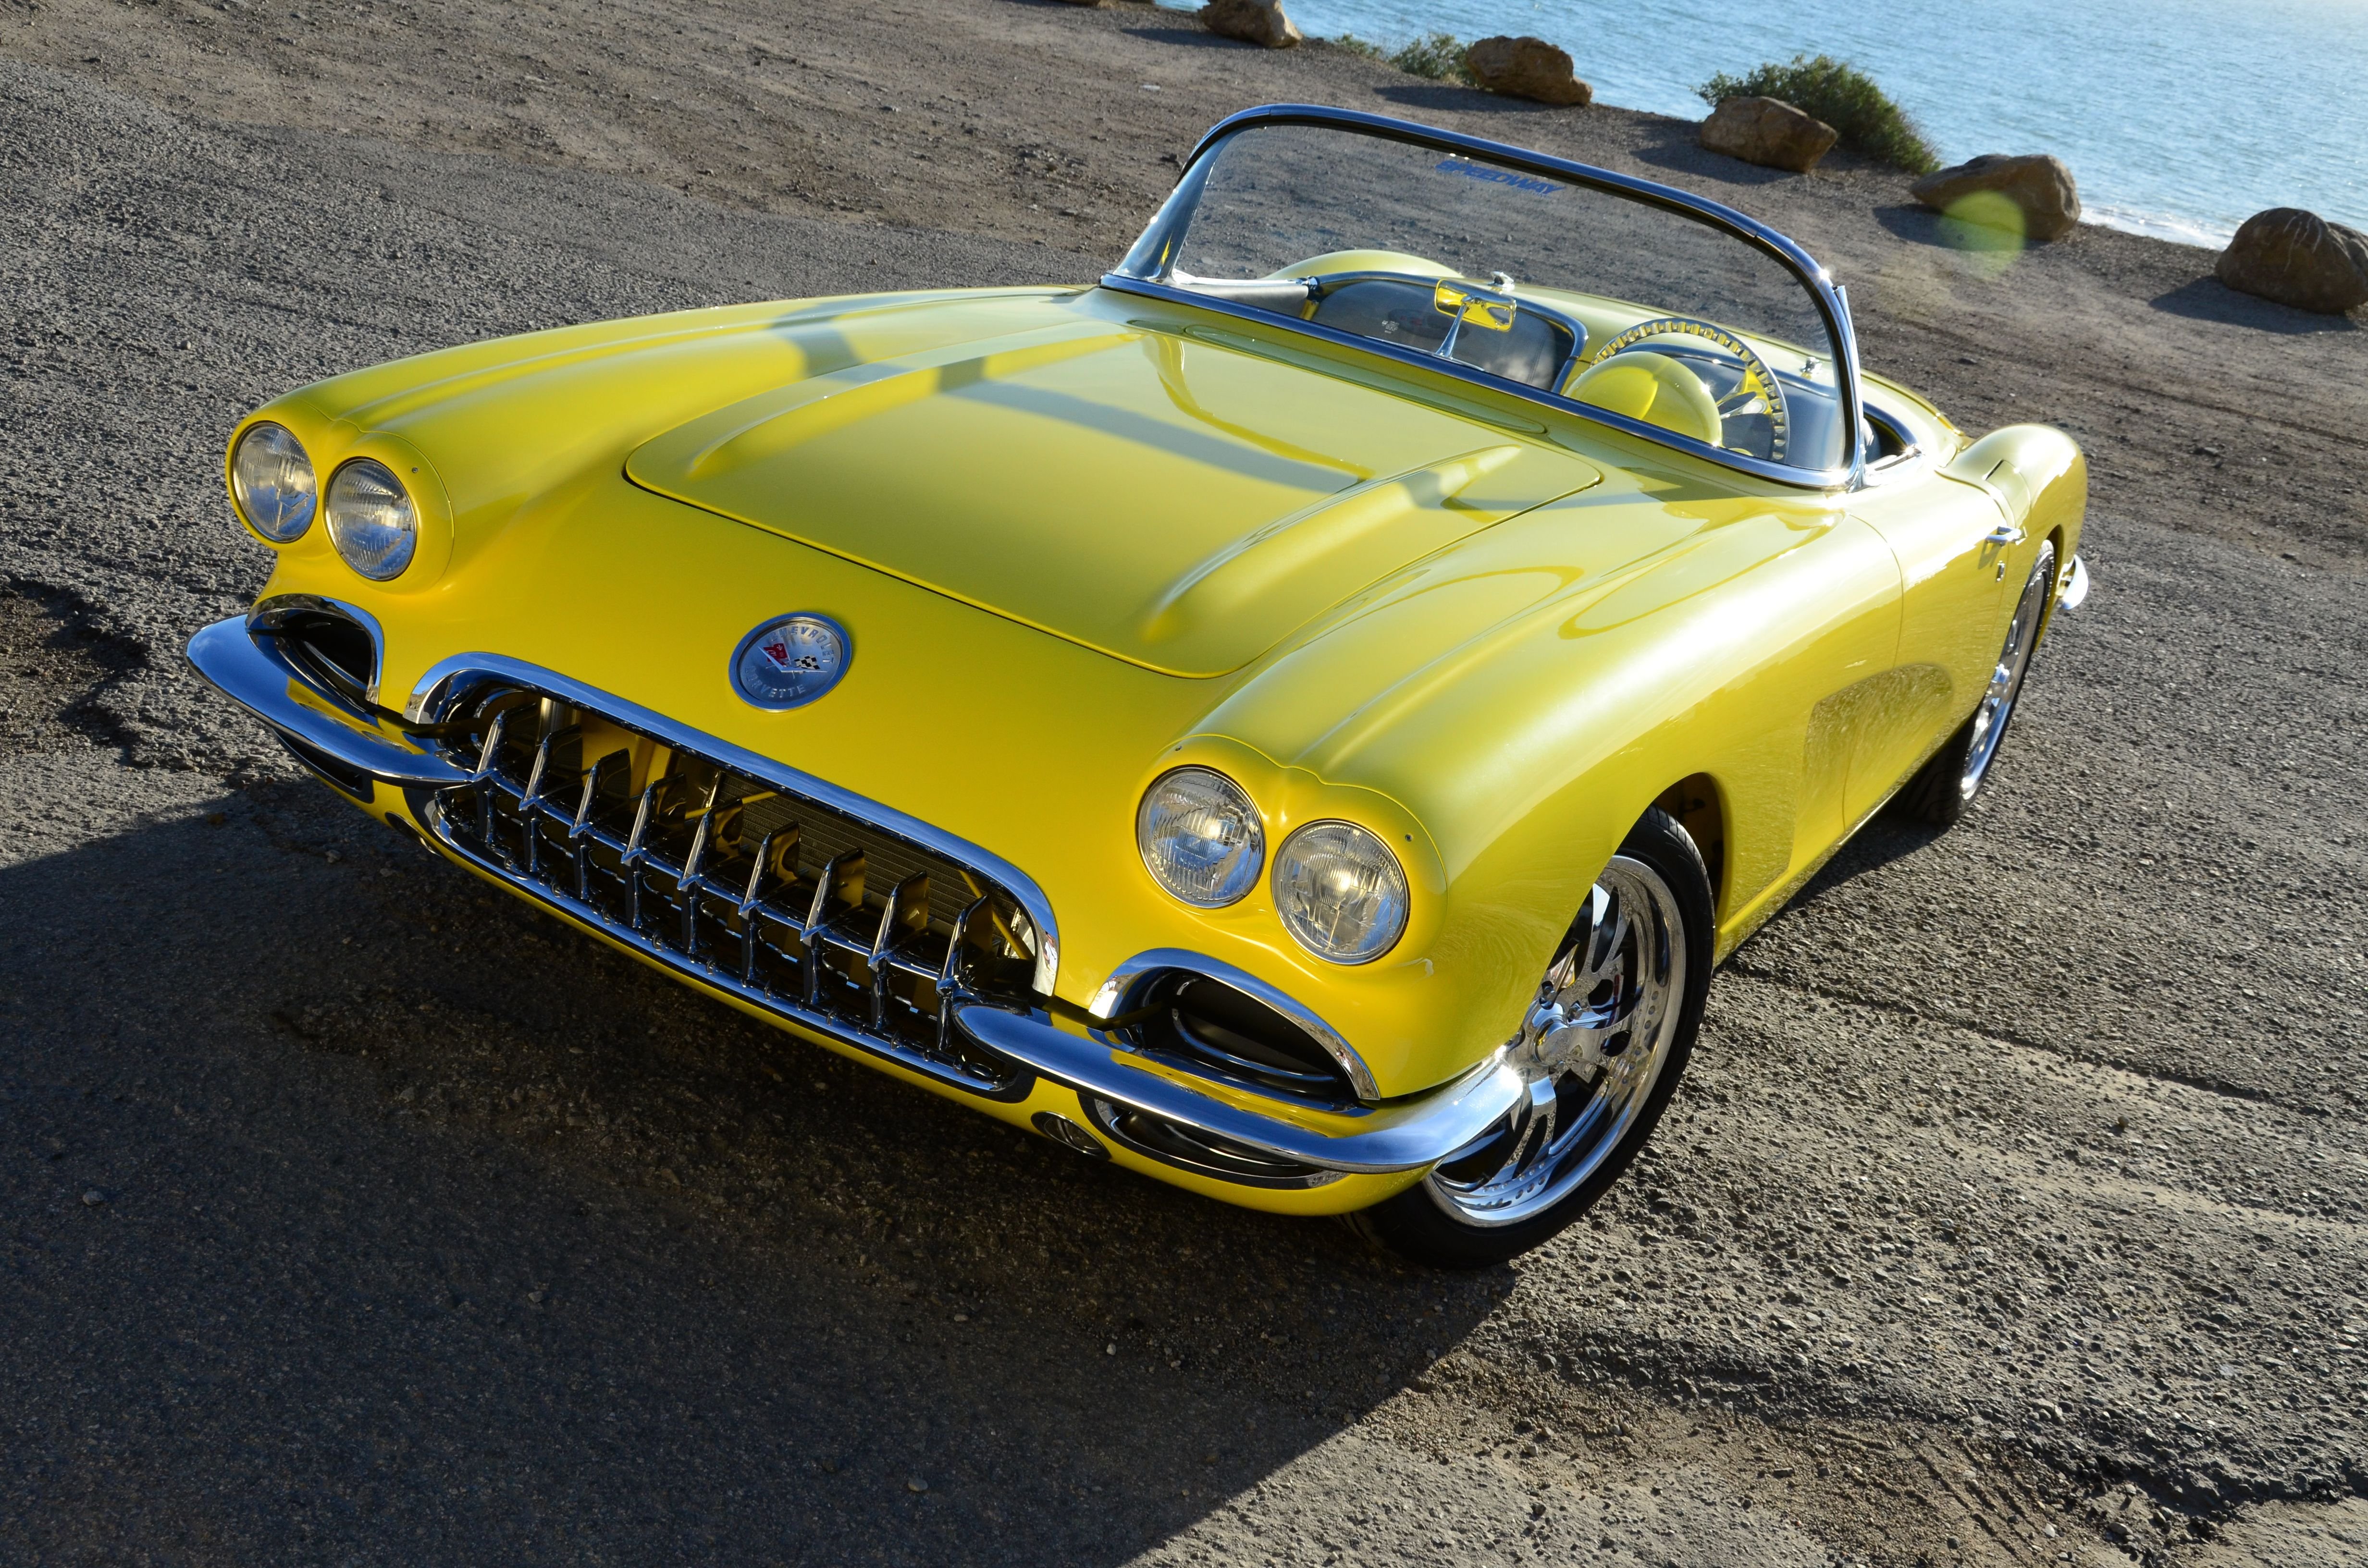 Corvette C1 Convertible Yellow Classic Modified Wallpaper Background